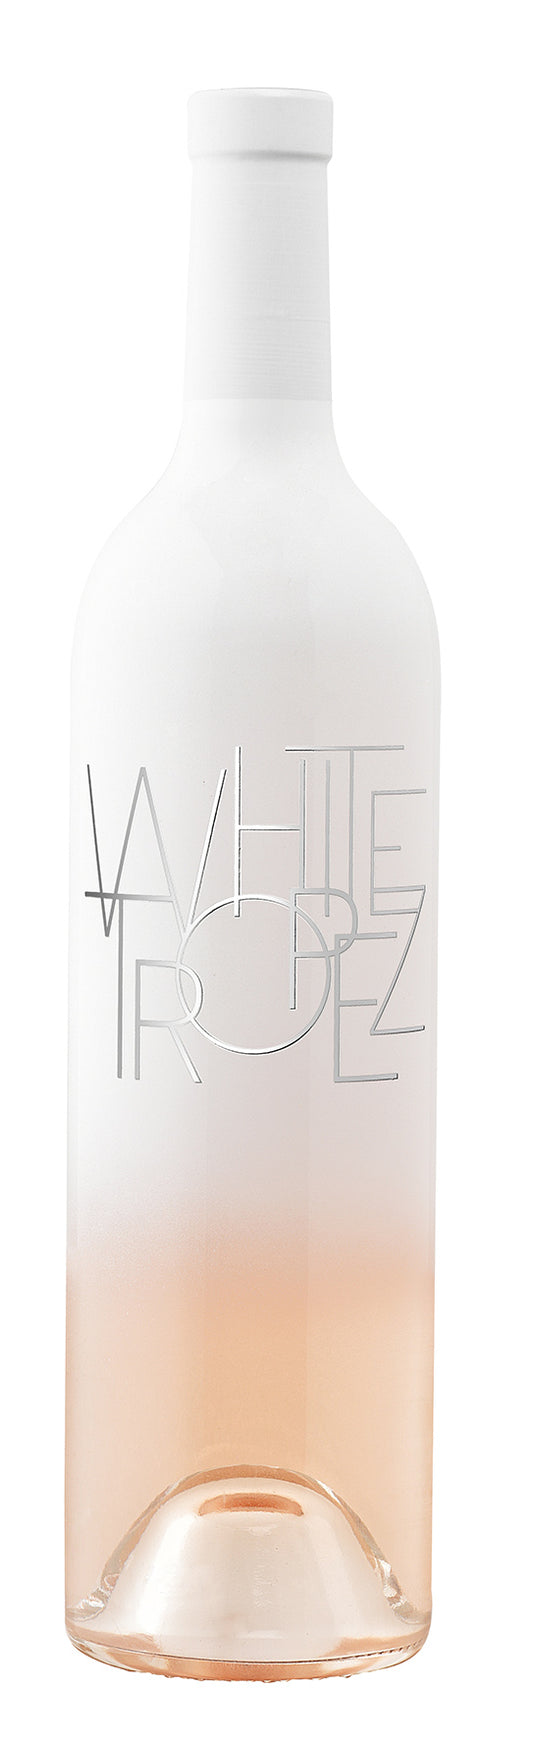 6x White Tropez Rosé